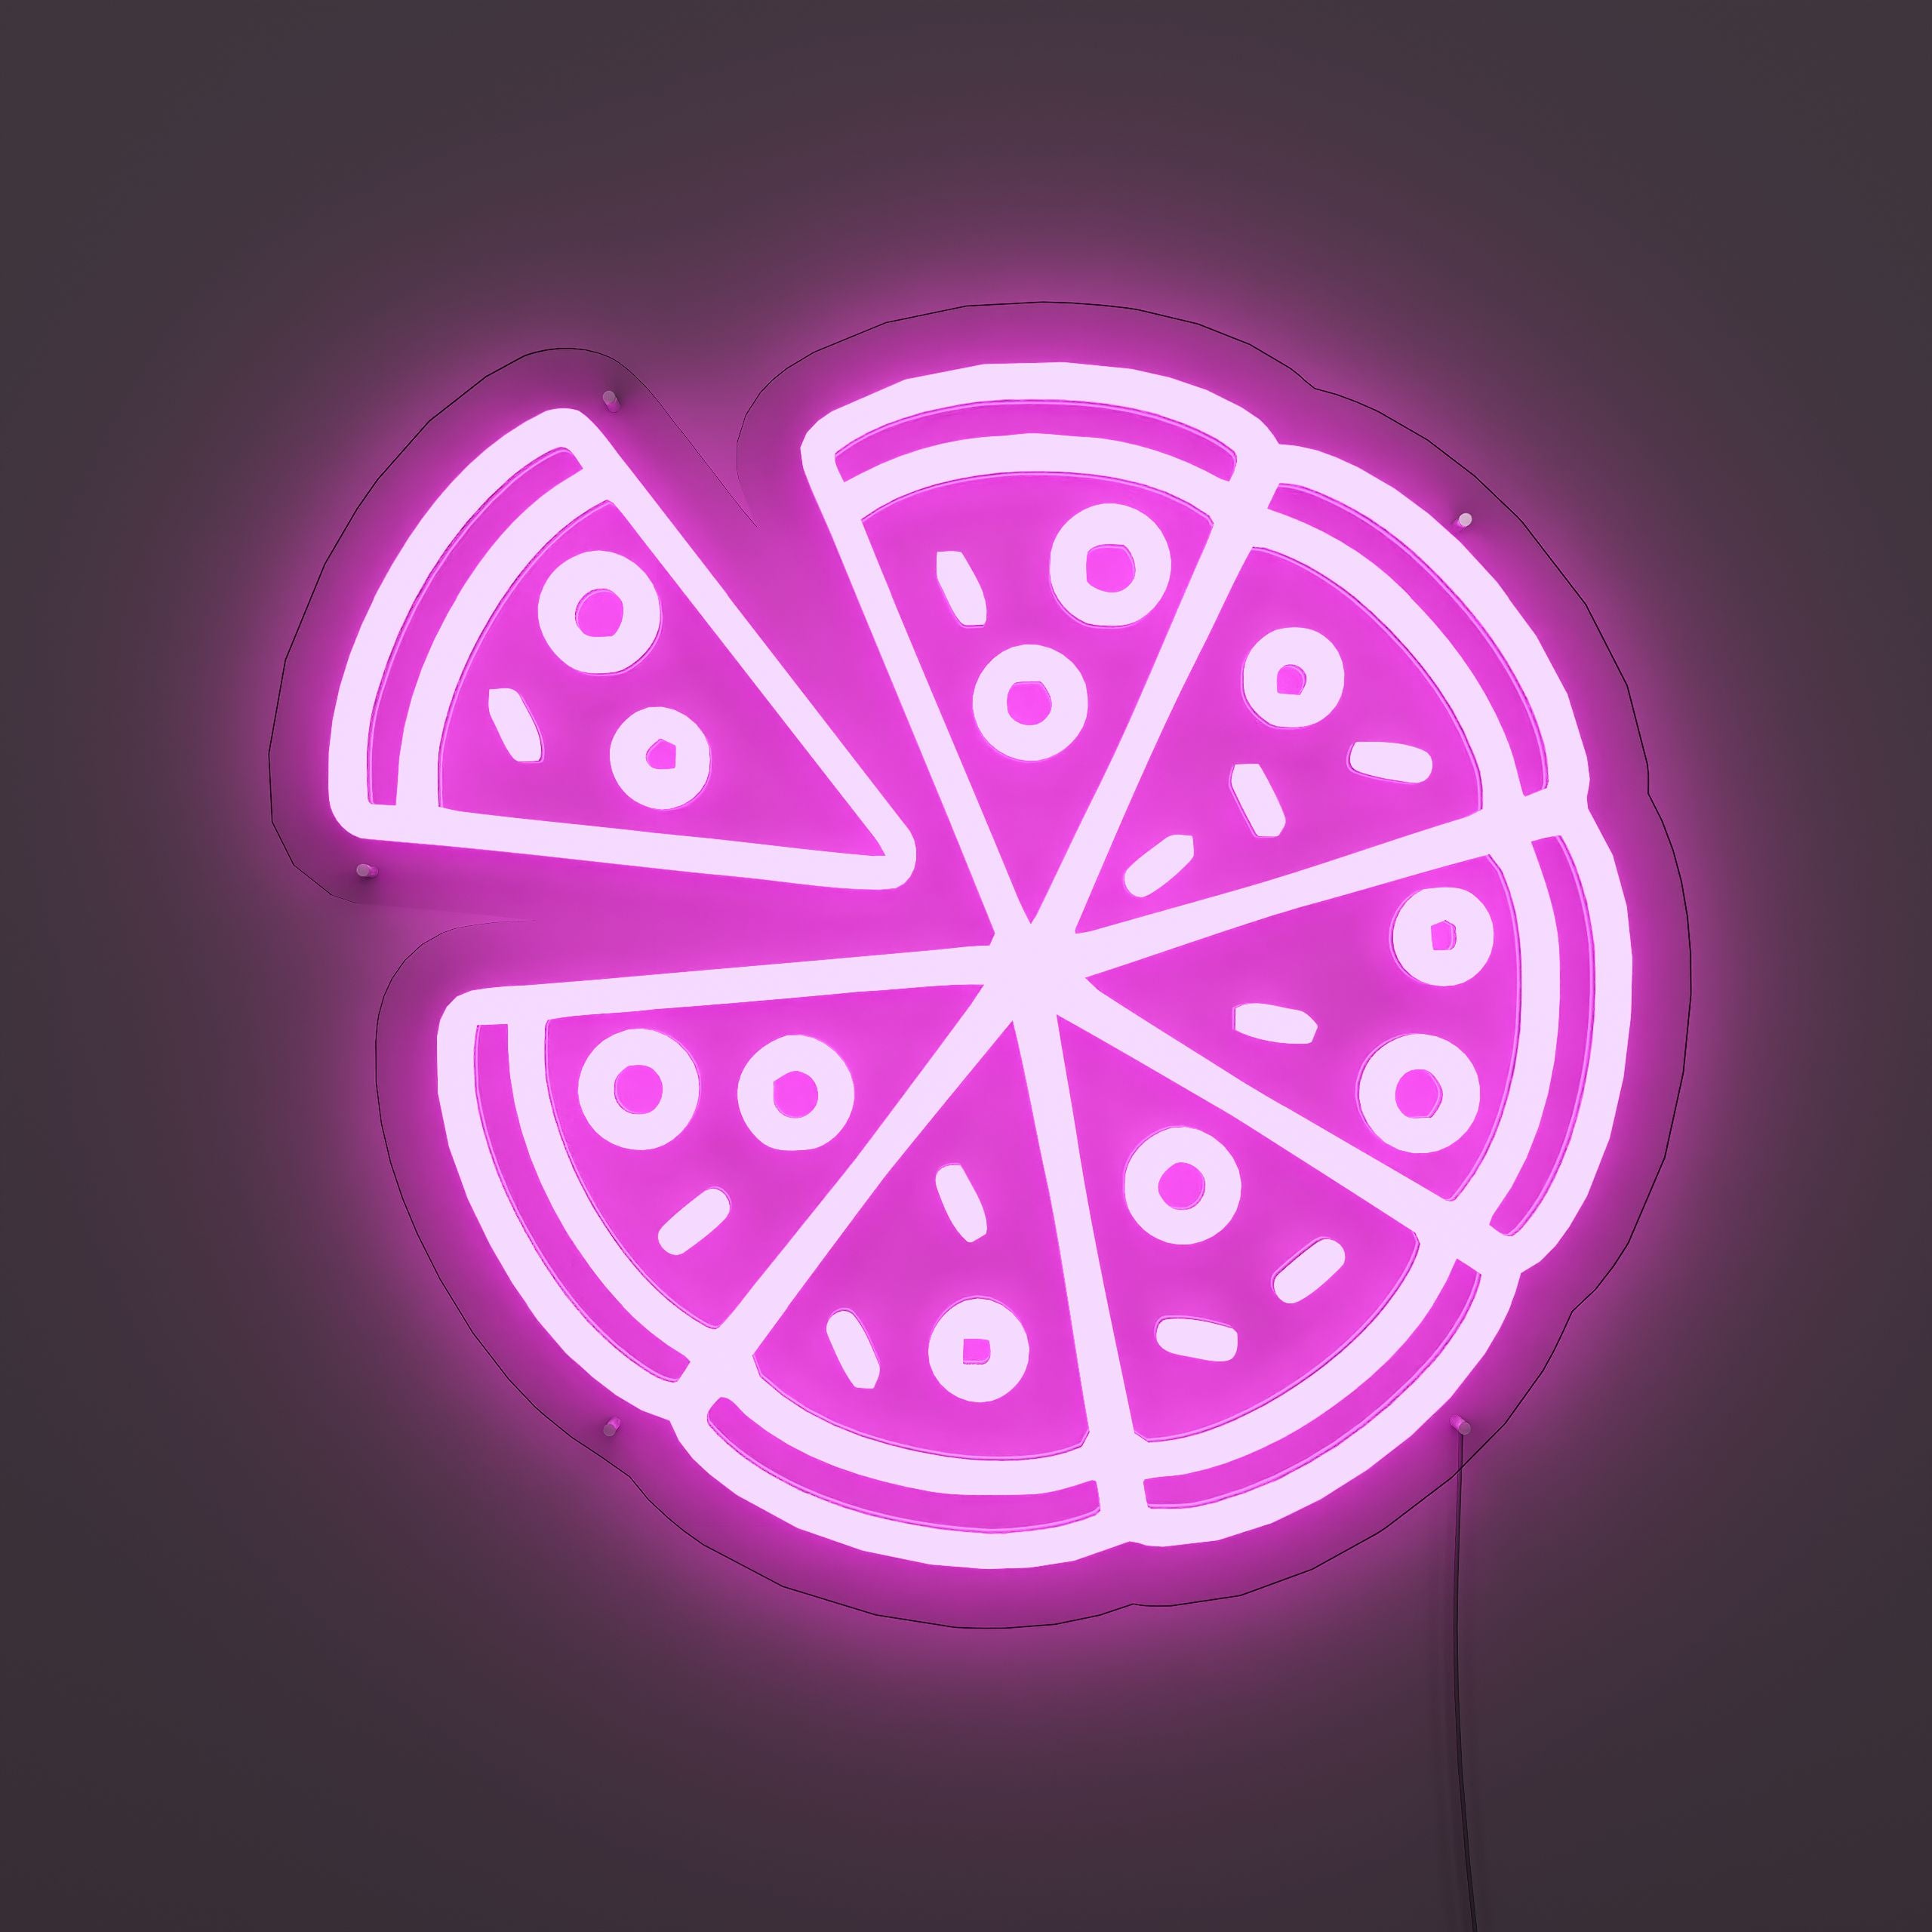 Enjoying-Pizza-Together-Neon-Sign-Lite